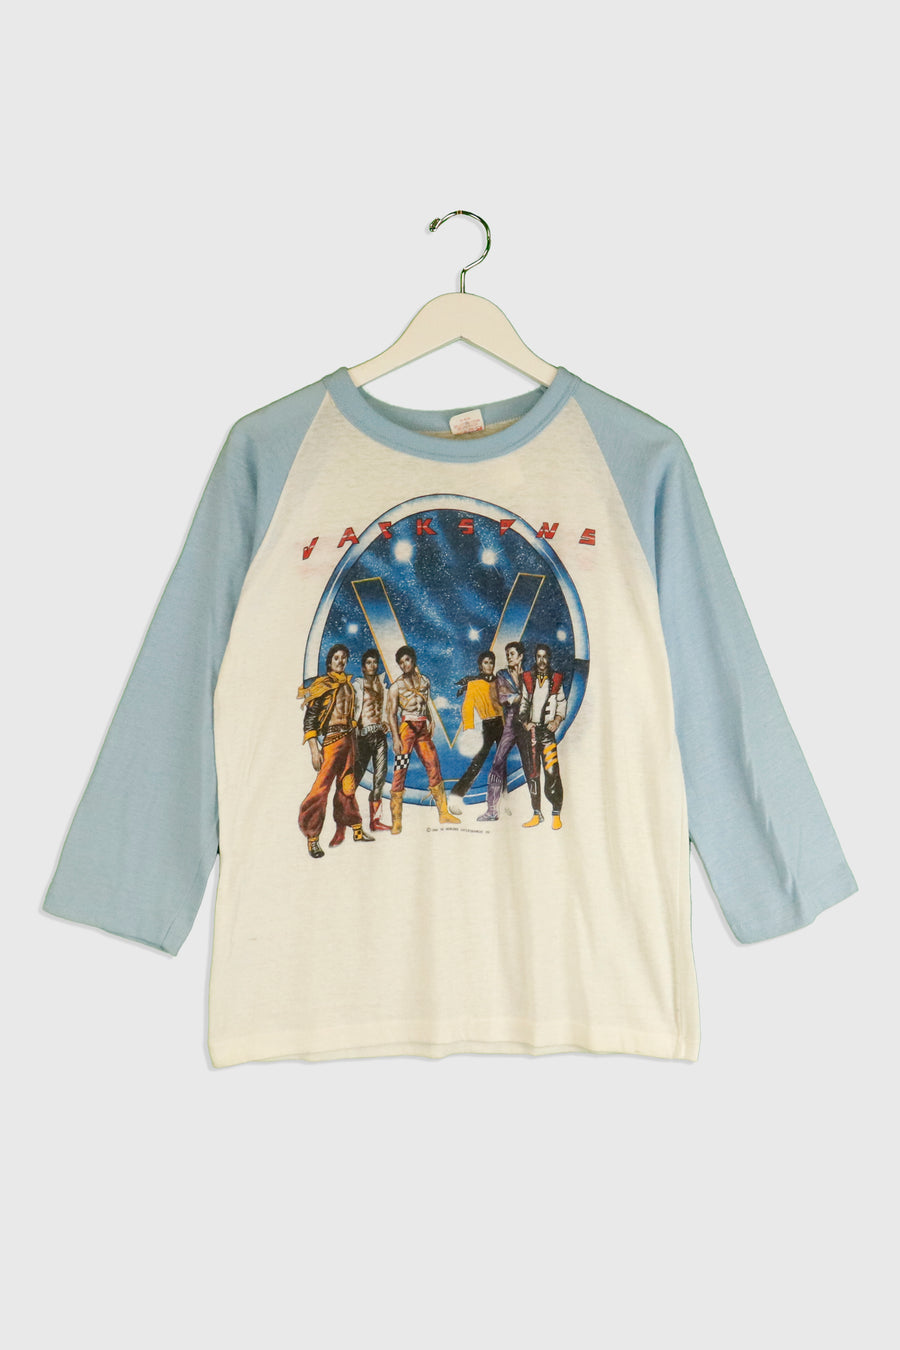 Vintage 1984 The Jackson Five Sci-Fi Themed T Shirt Sz L